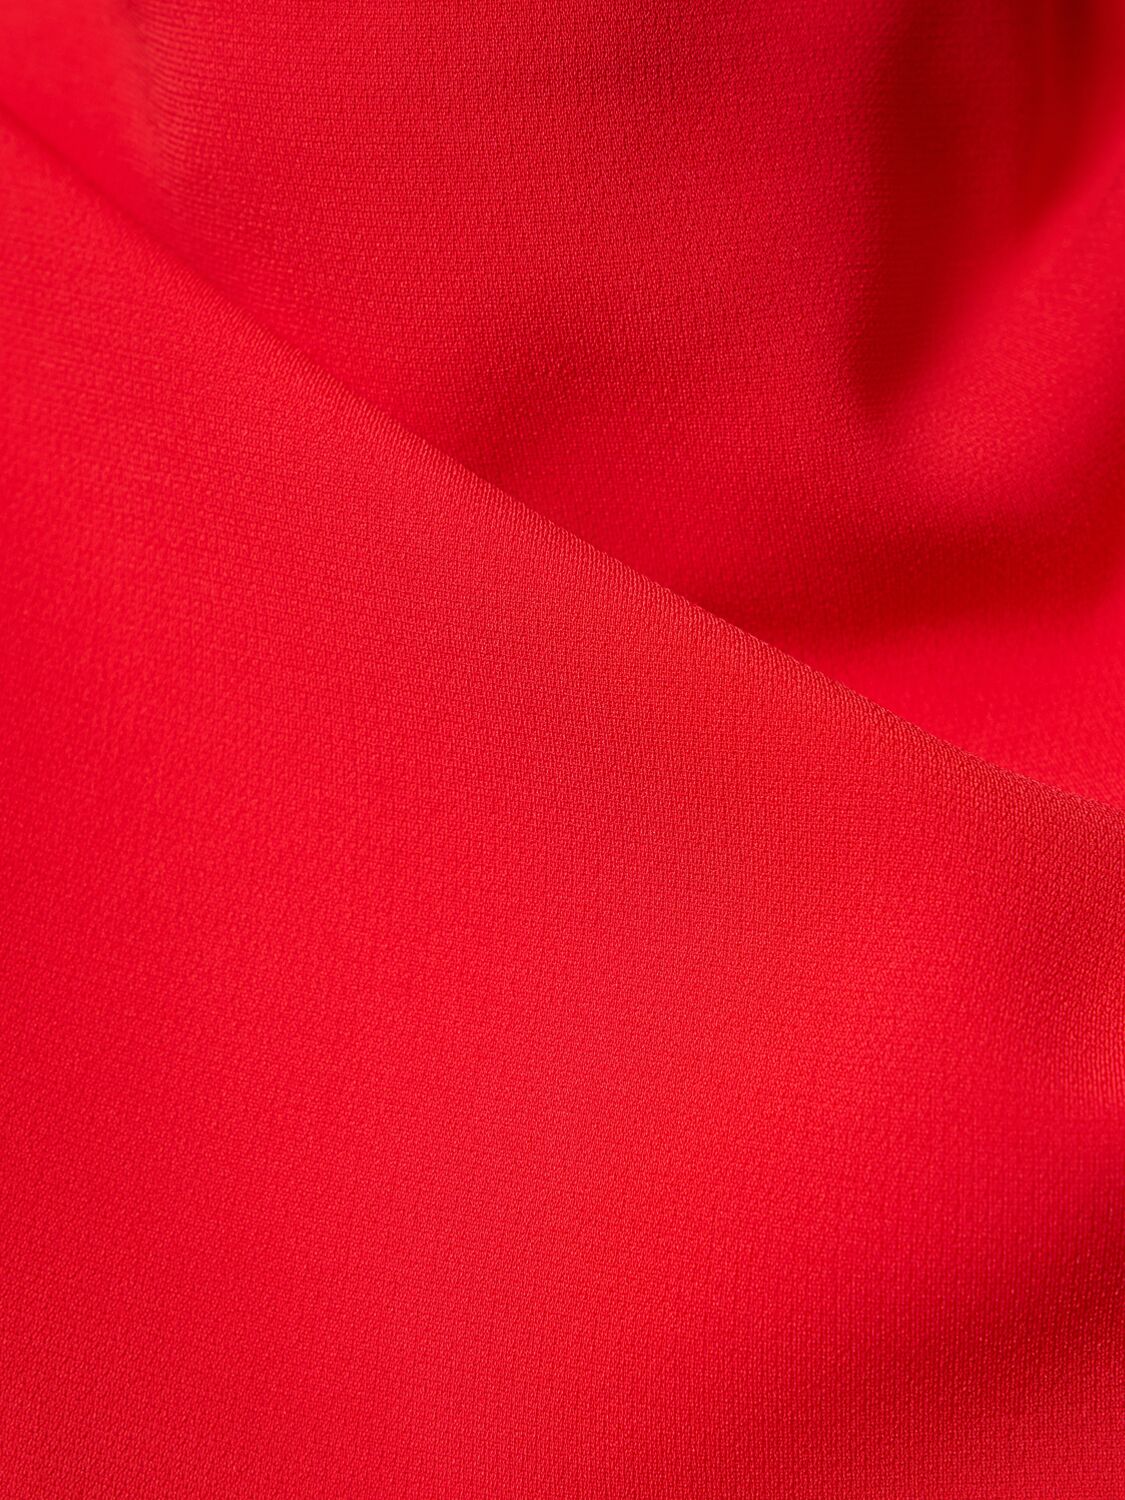 Shop Proenza Schouler Faye Backless Matte Crepe Long Dress In Red